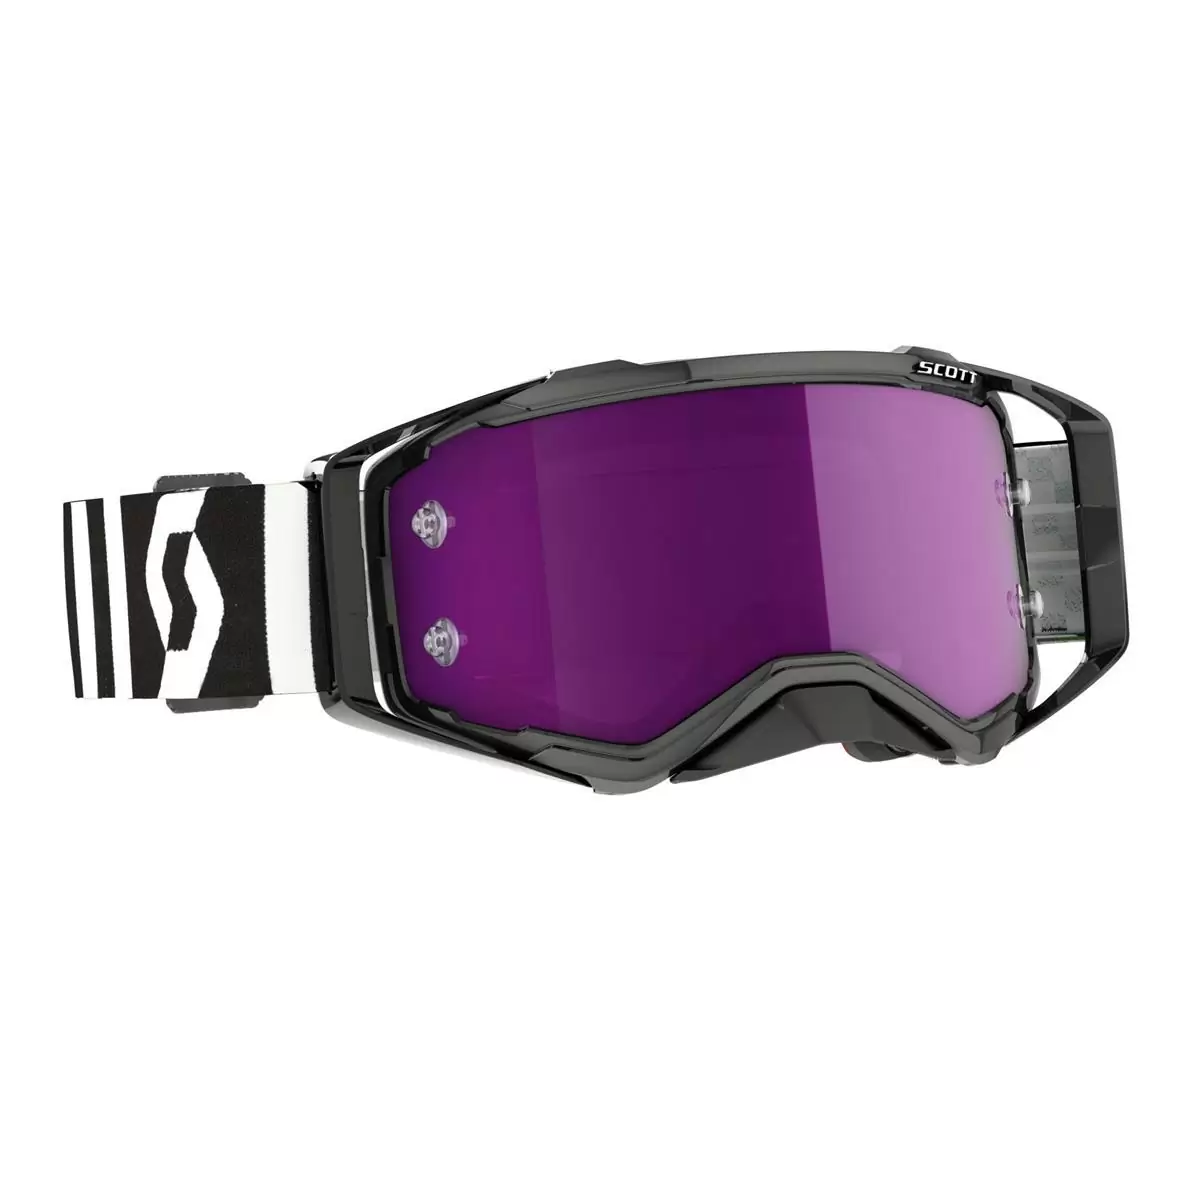 Prospect Mask White/Black With Chrome Works Purple Lens - image